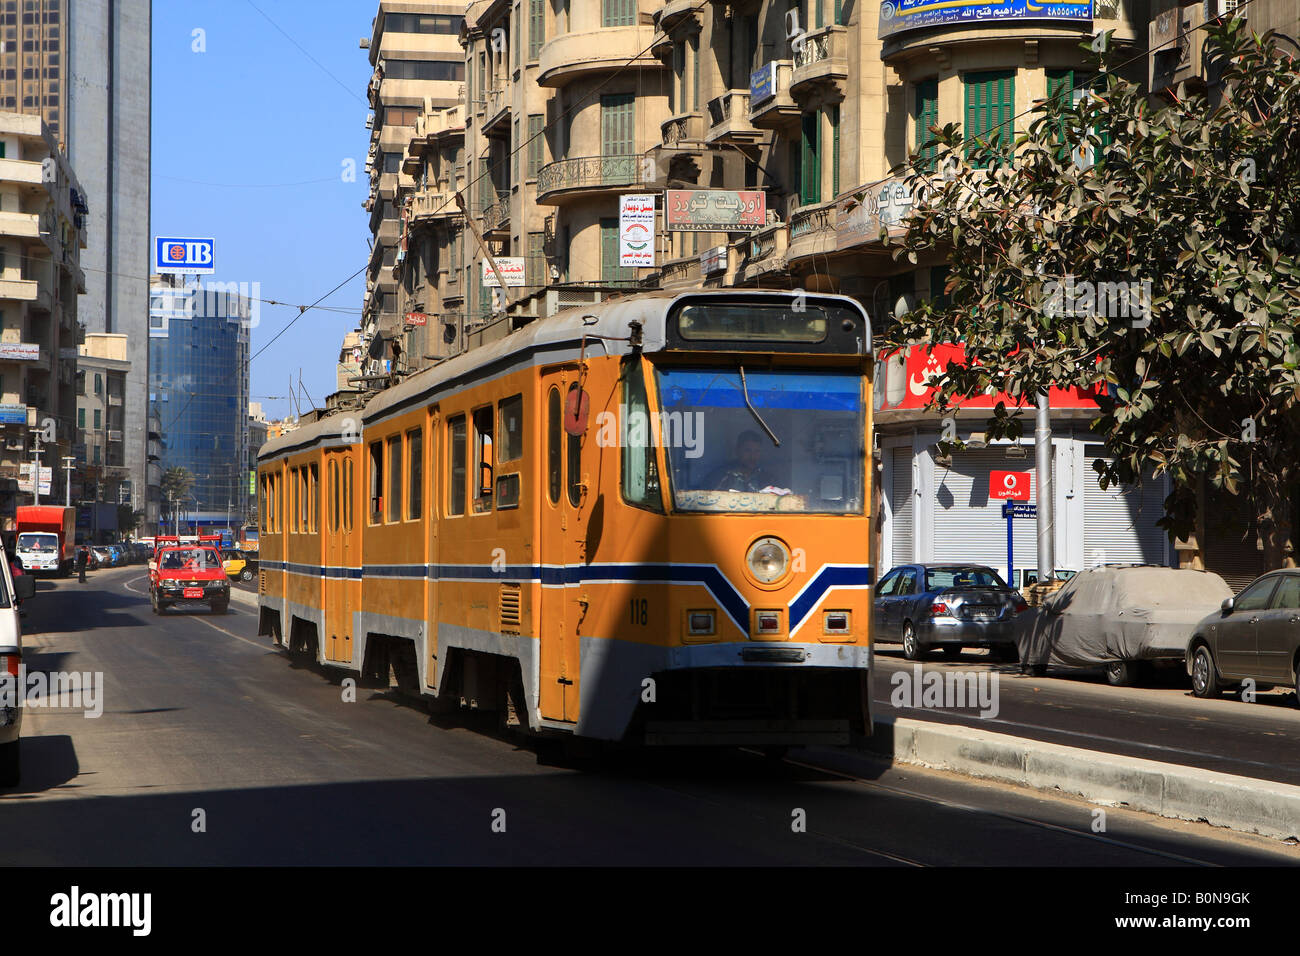 legacy trams egypt